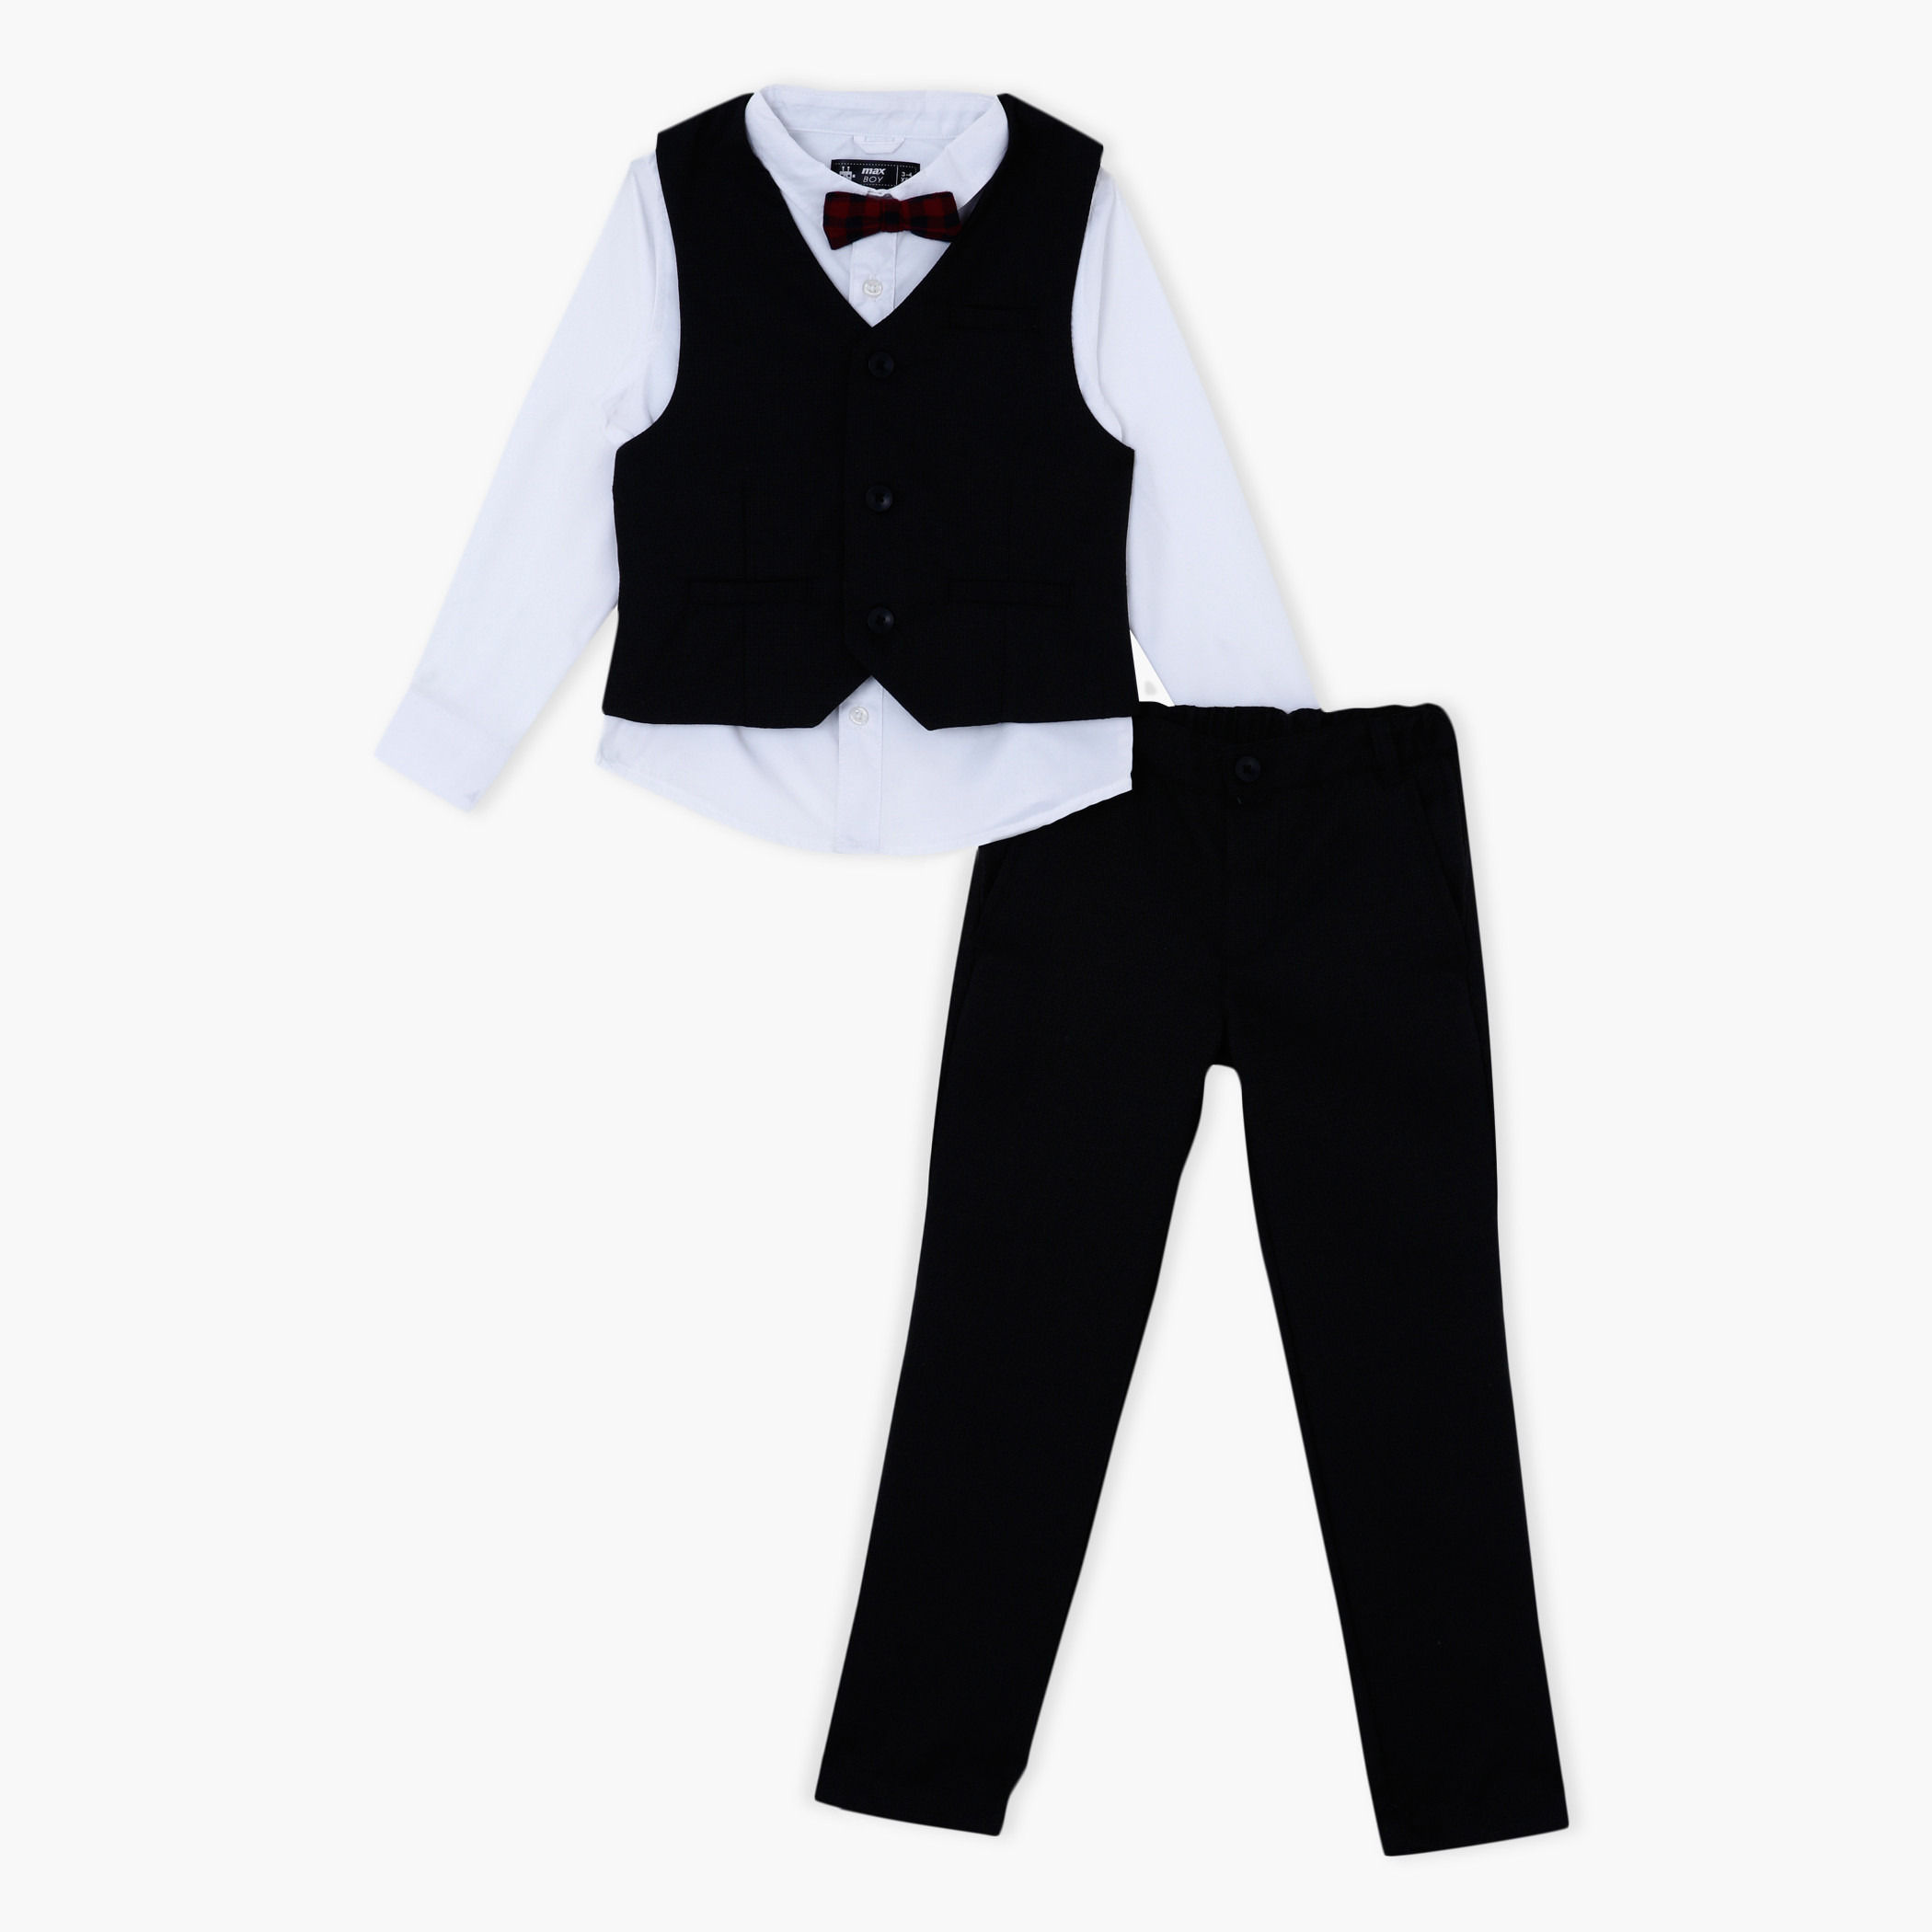 Hermosala Teens Boy 4pc set Formal White Shirt Black Pants Vest Bow Tie  Outfit | eBay